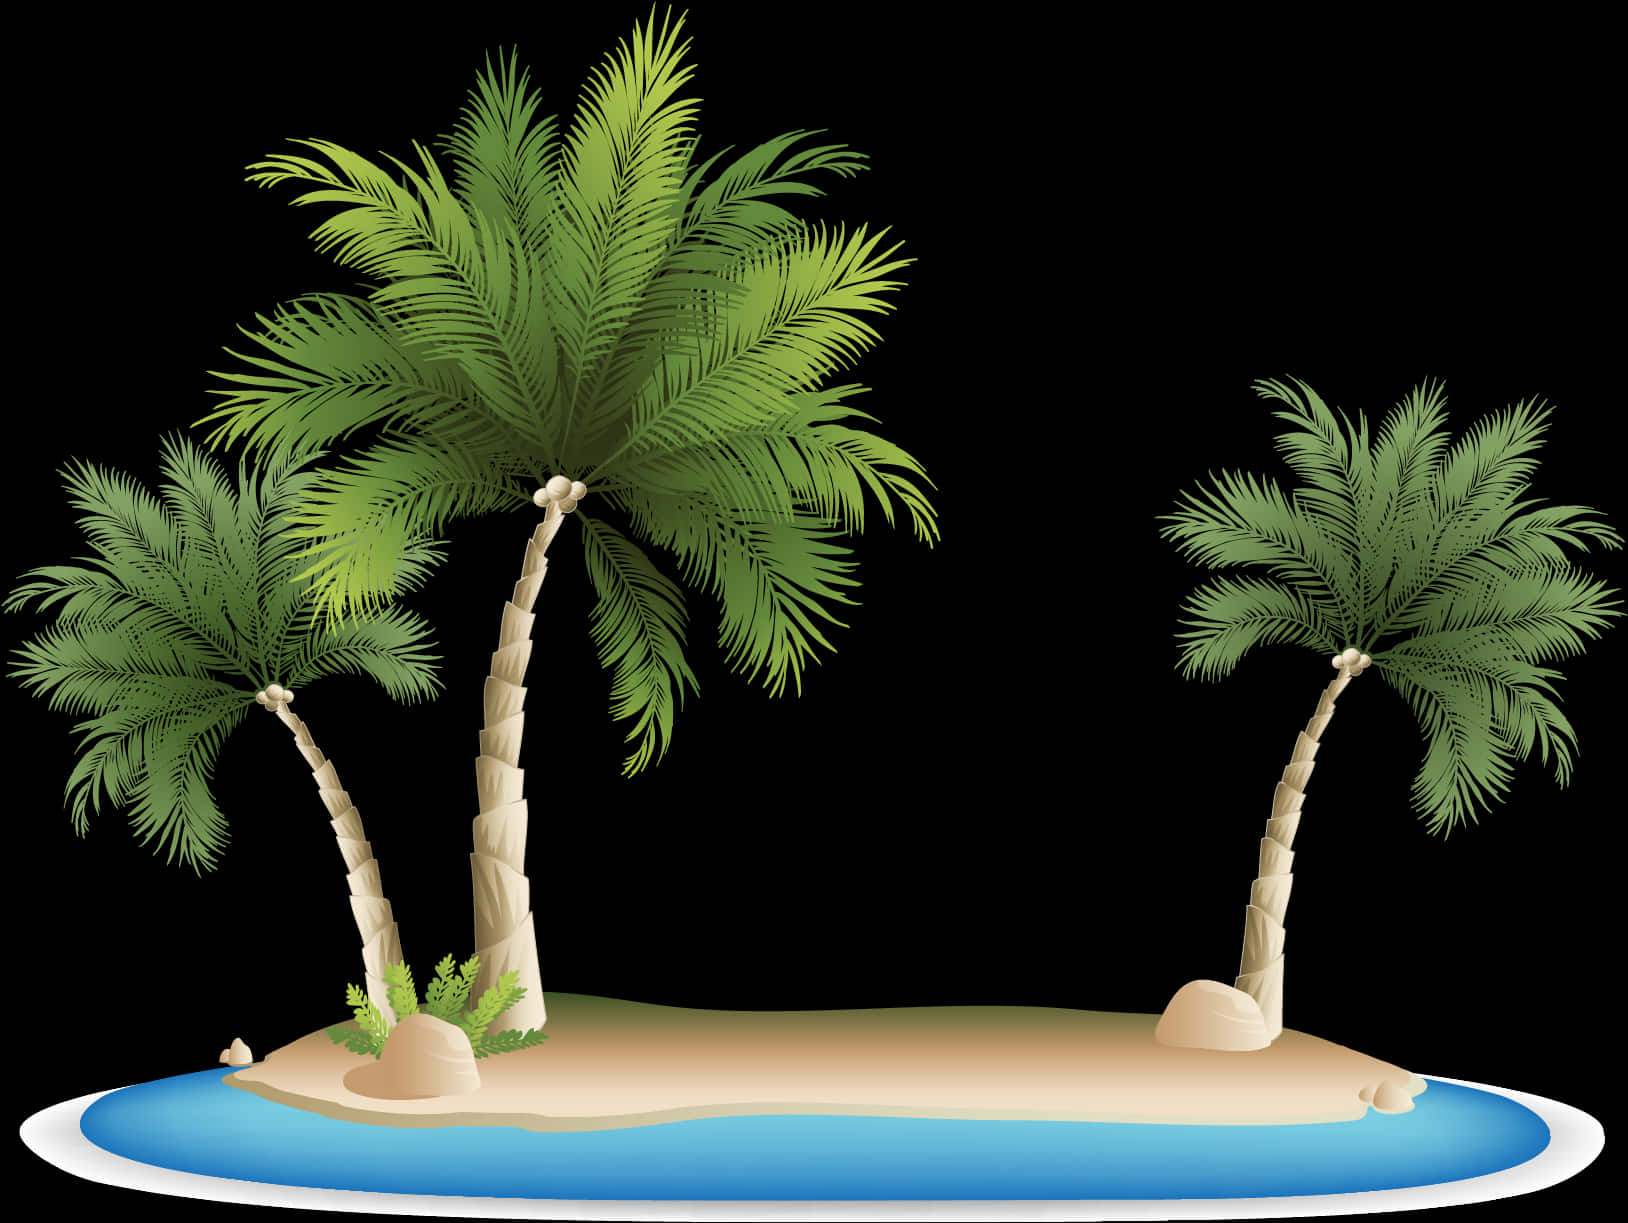 Tropical Palm Island Illustration